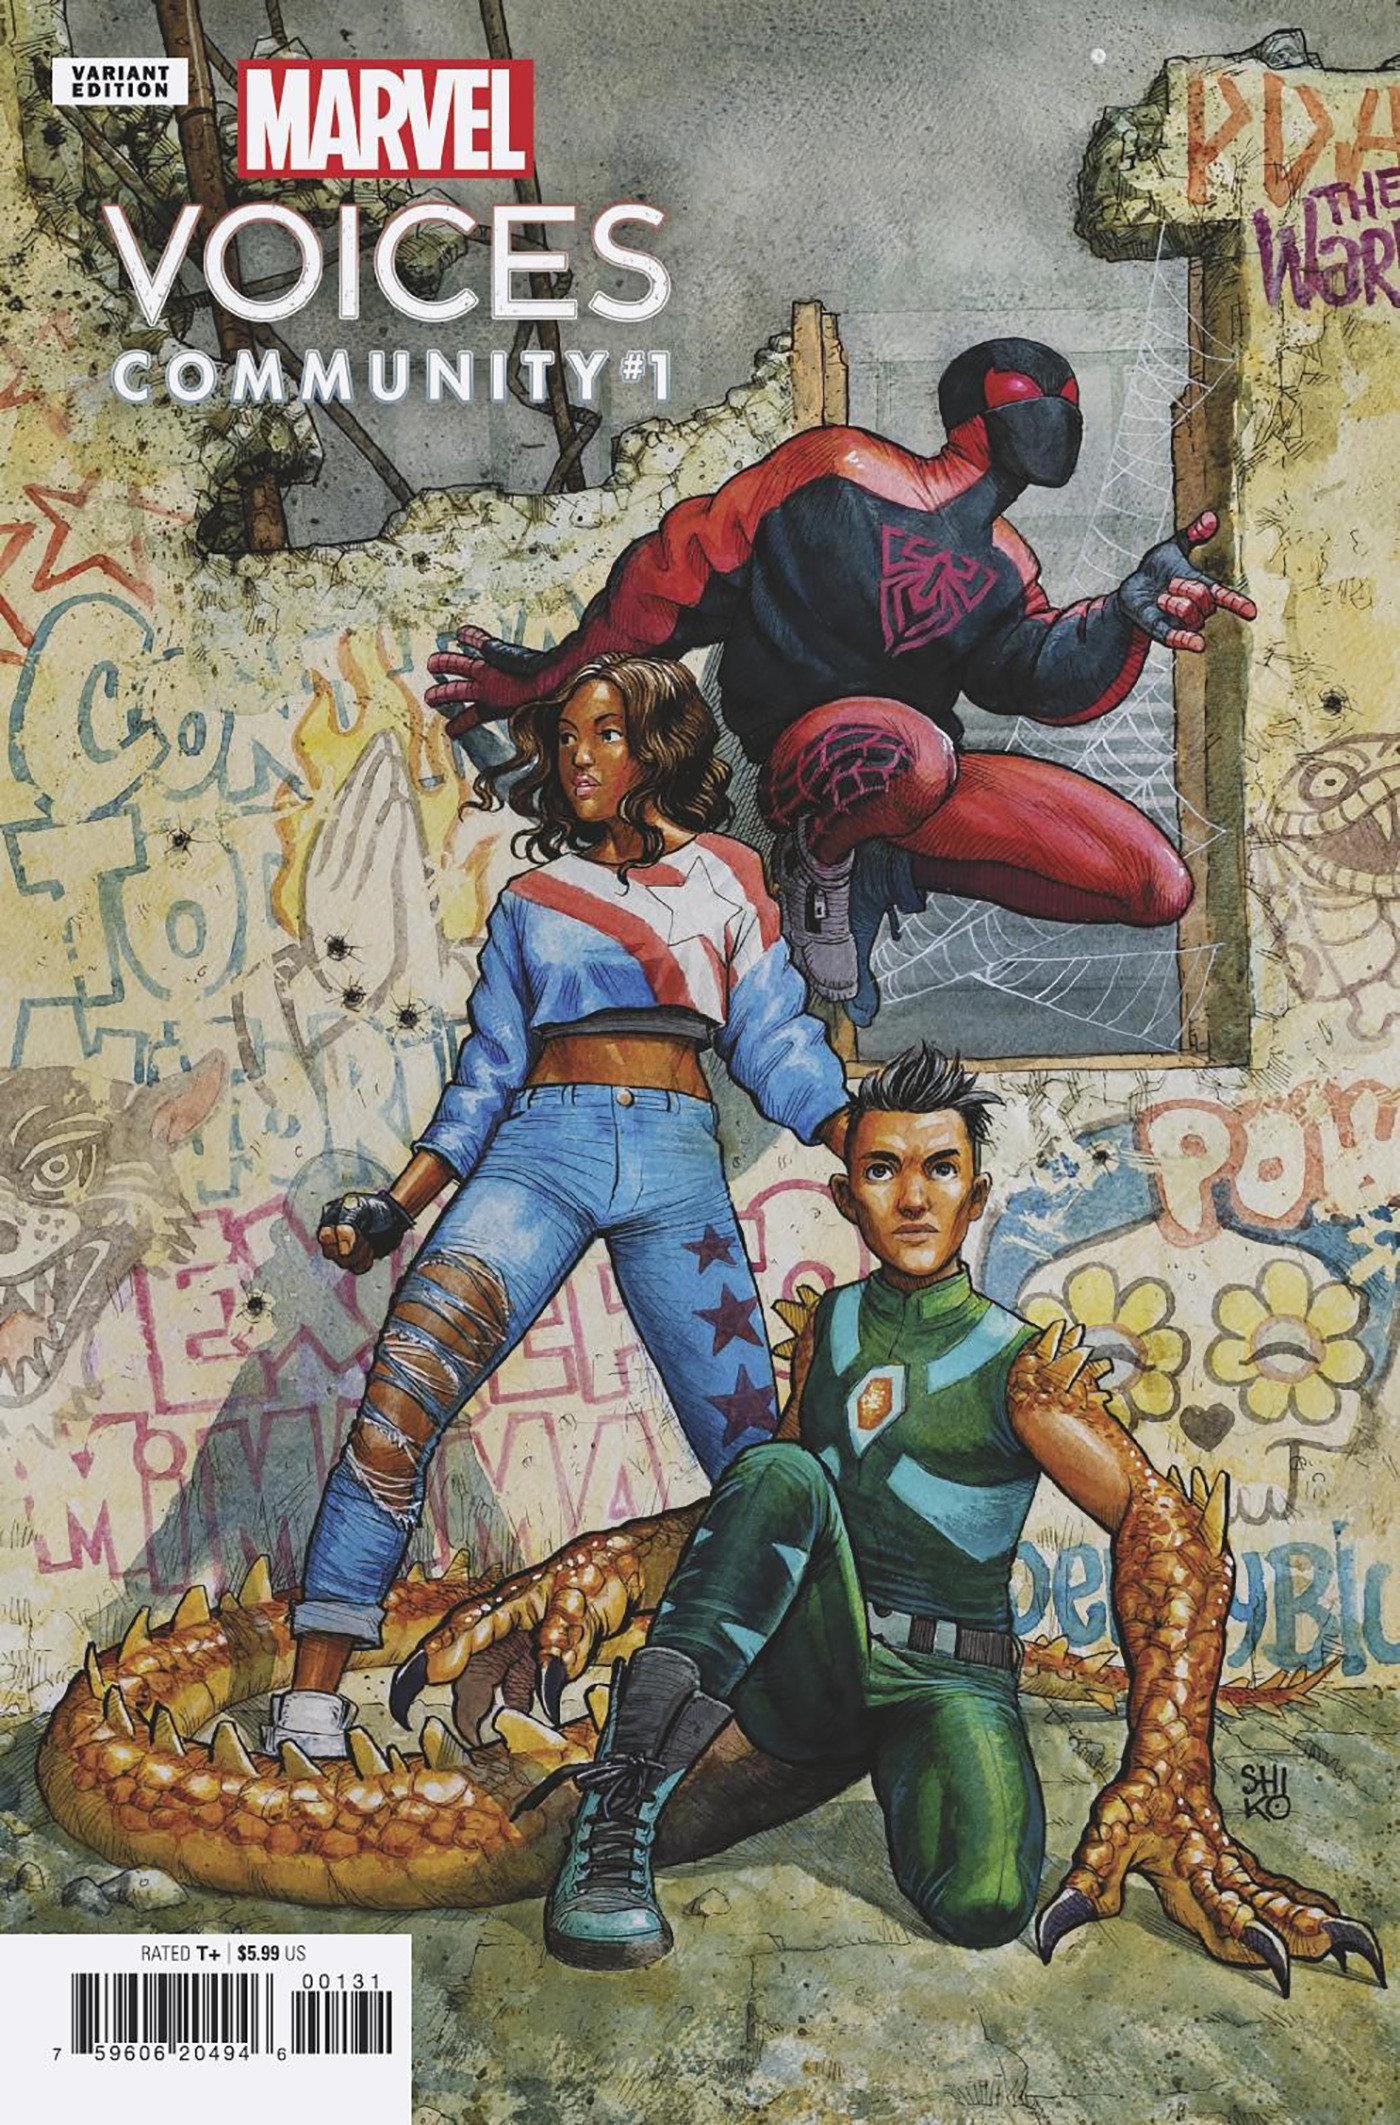 Marvel's Voices Community #1 Shiko Variant